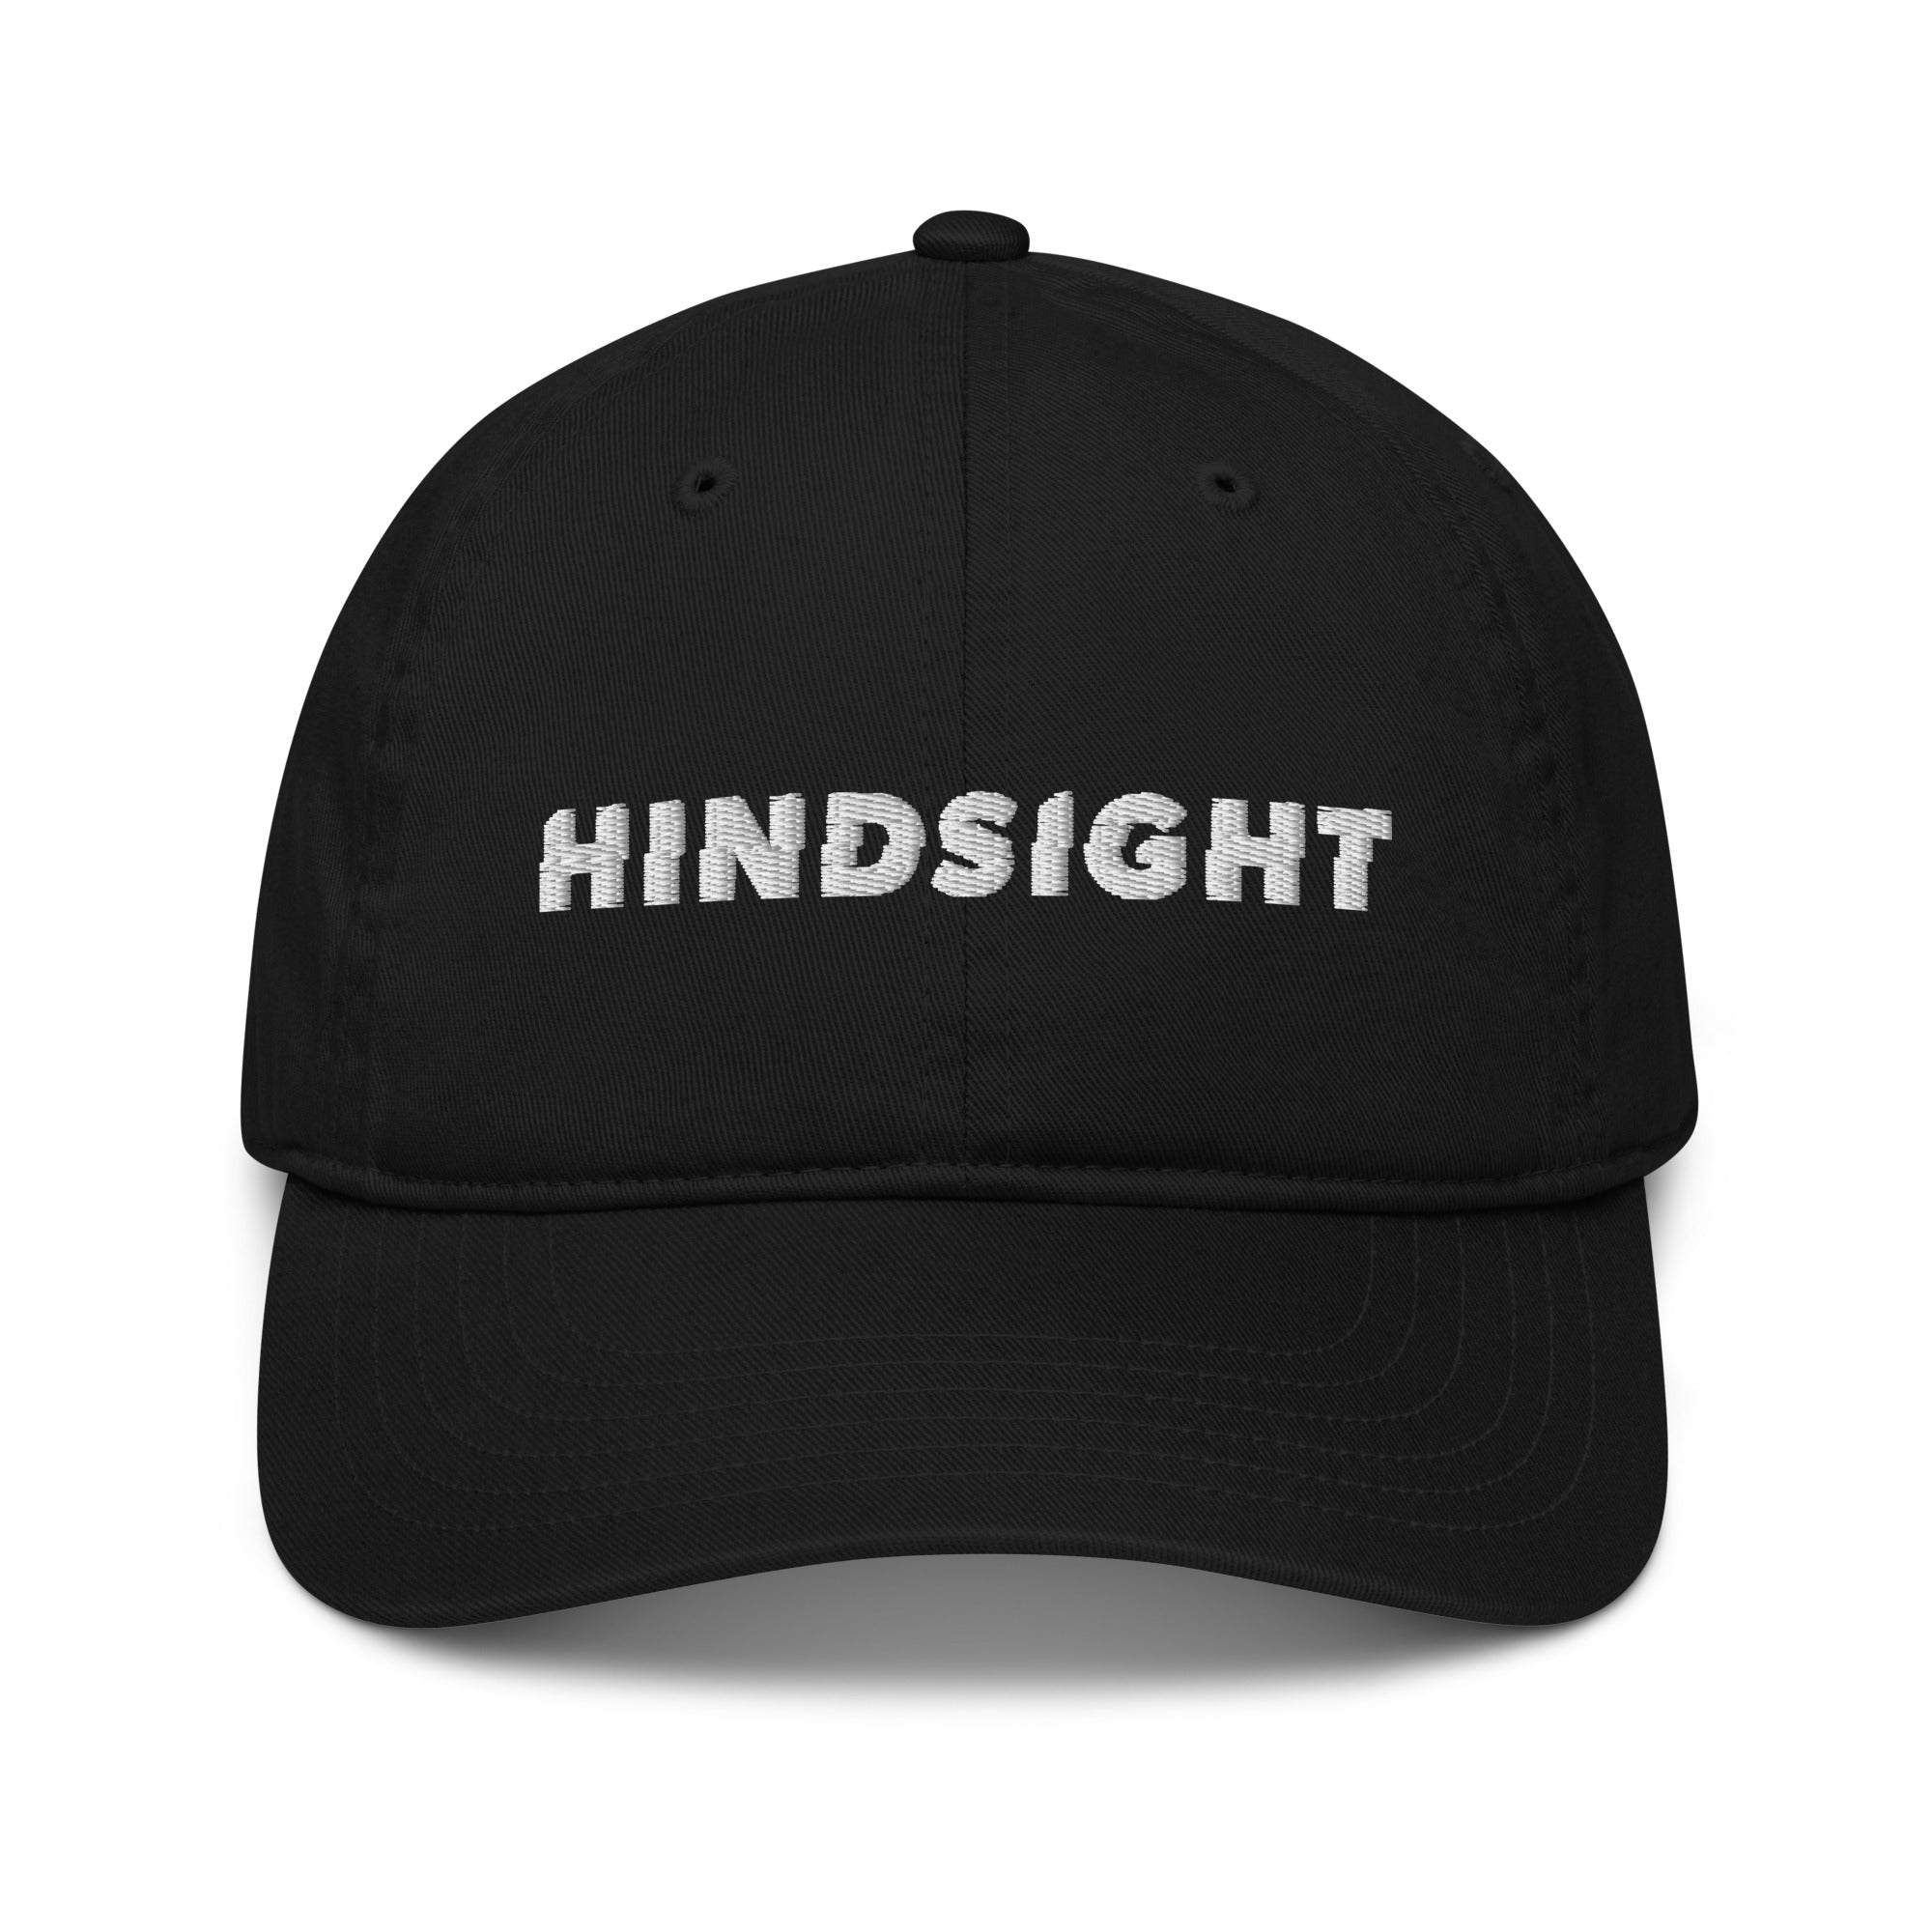 HindSight Organic hat - white logo